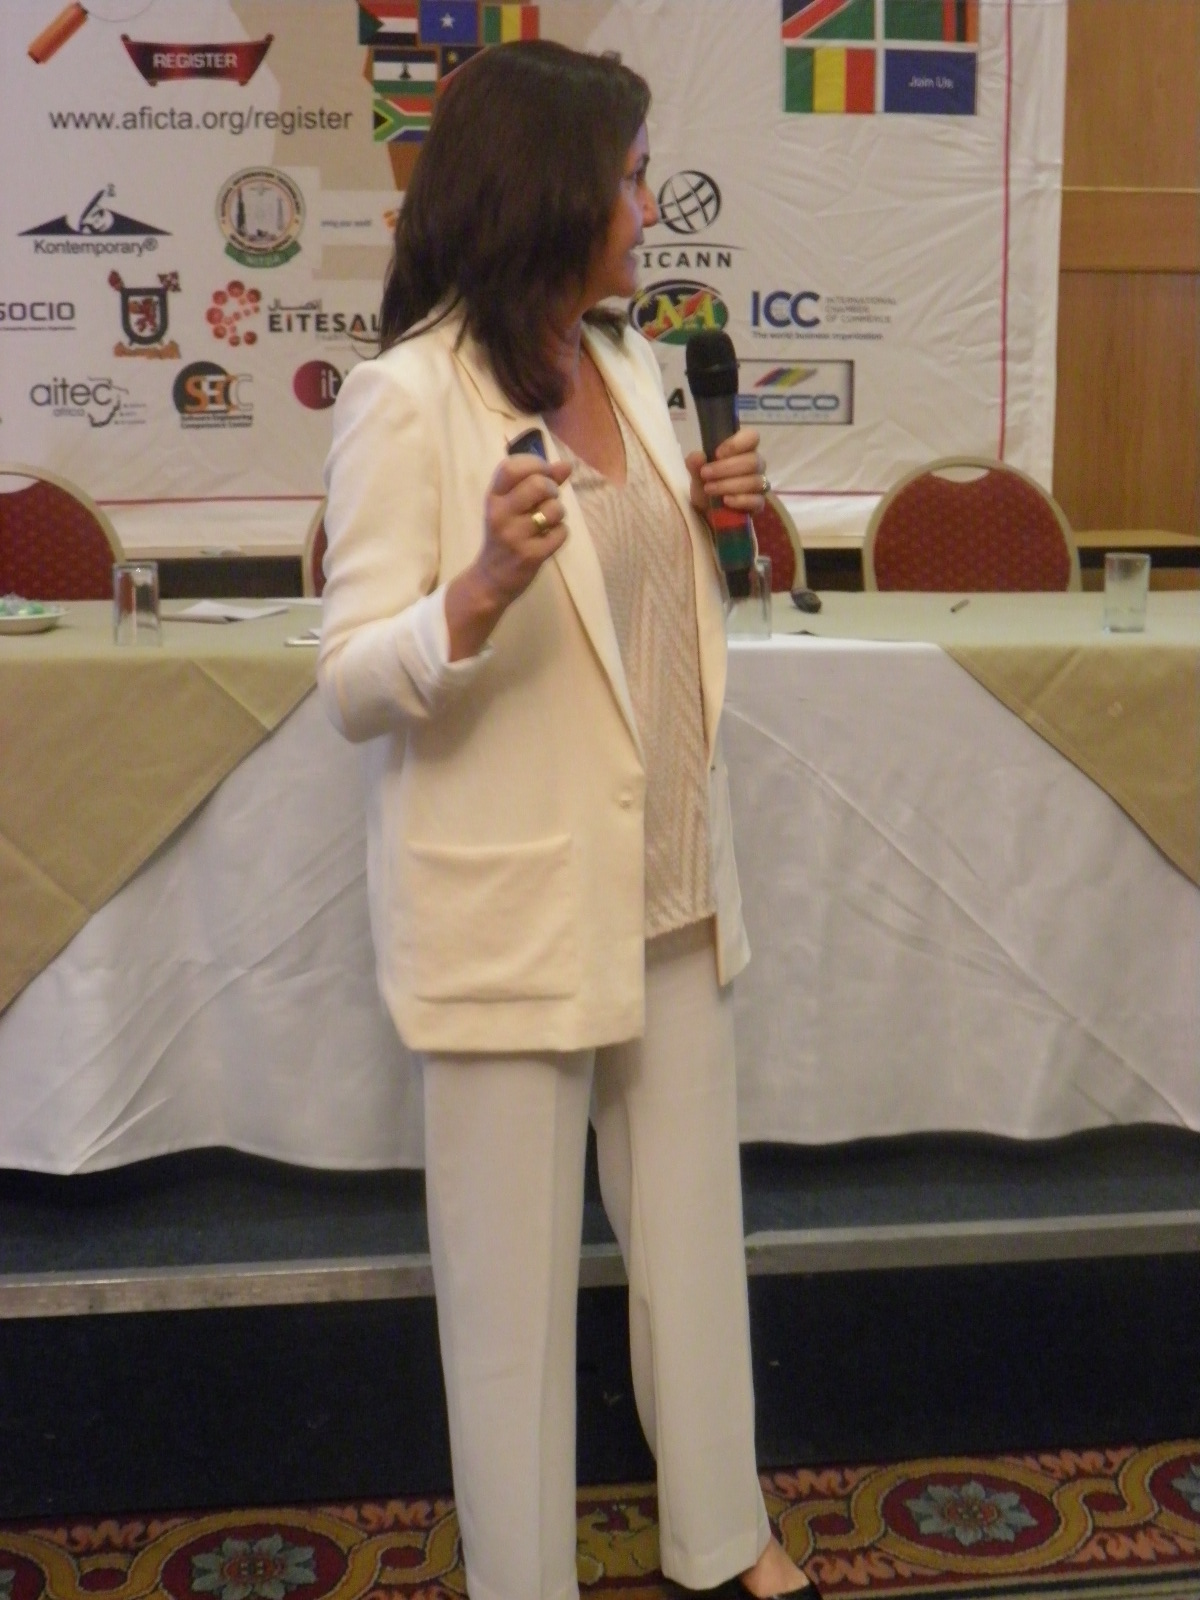 Pastora Valero (Dimension Data) During her Presentation